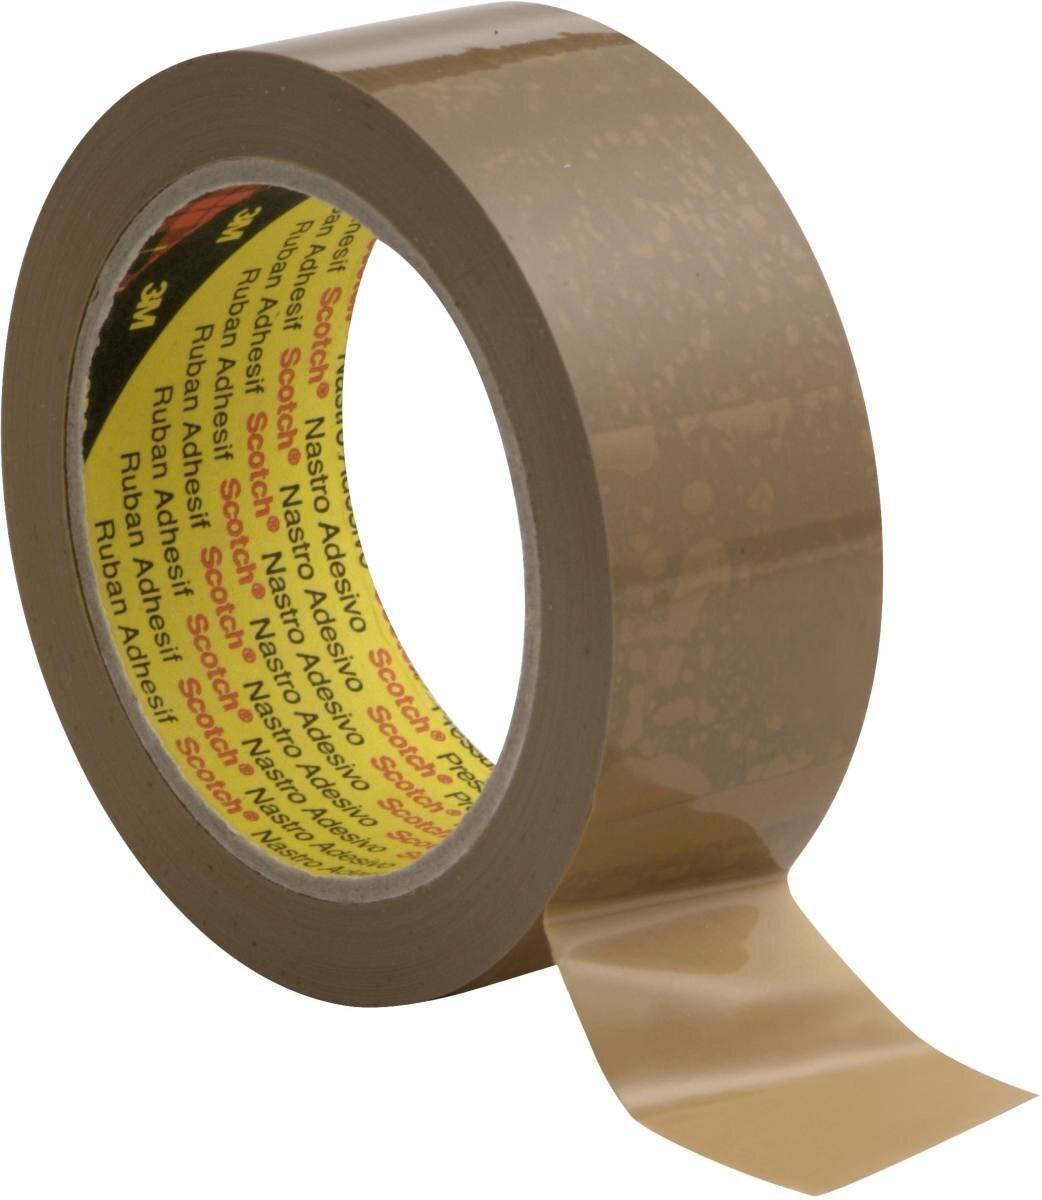 3M Scotch packaging tape 6890, brown, 75 mm x 990 m, 0.05 mm